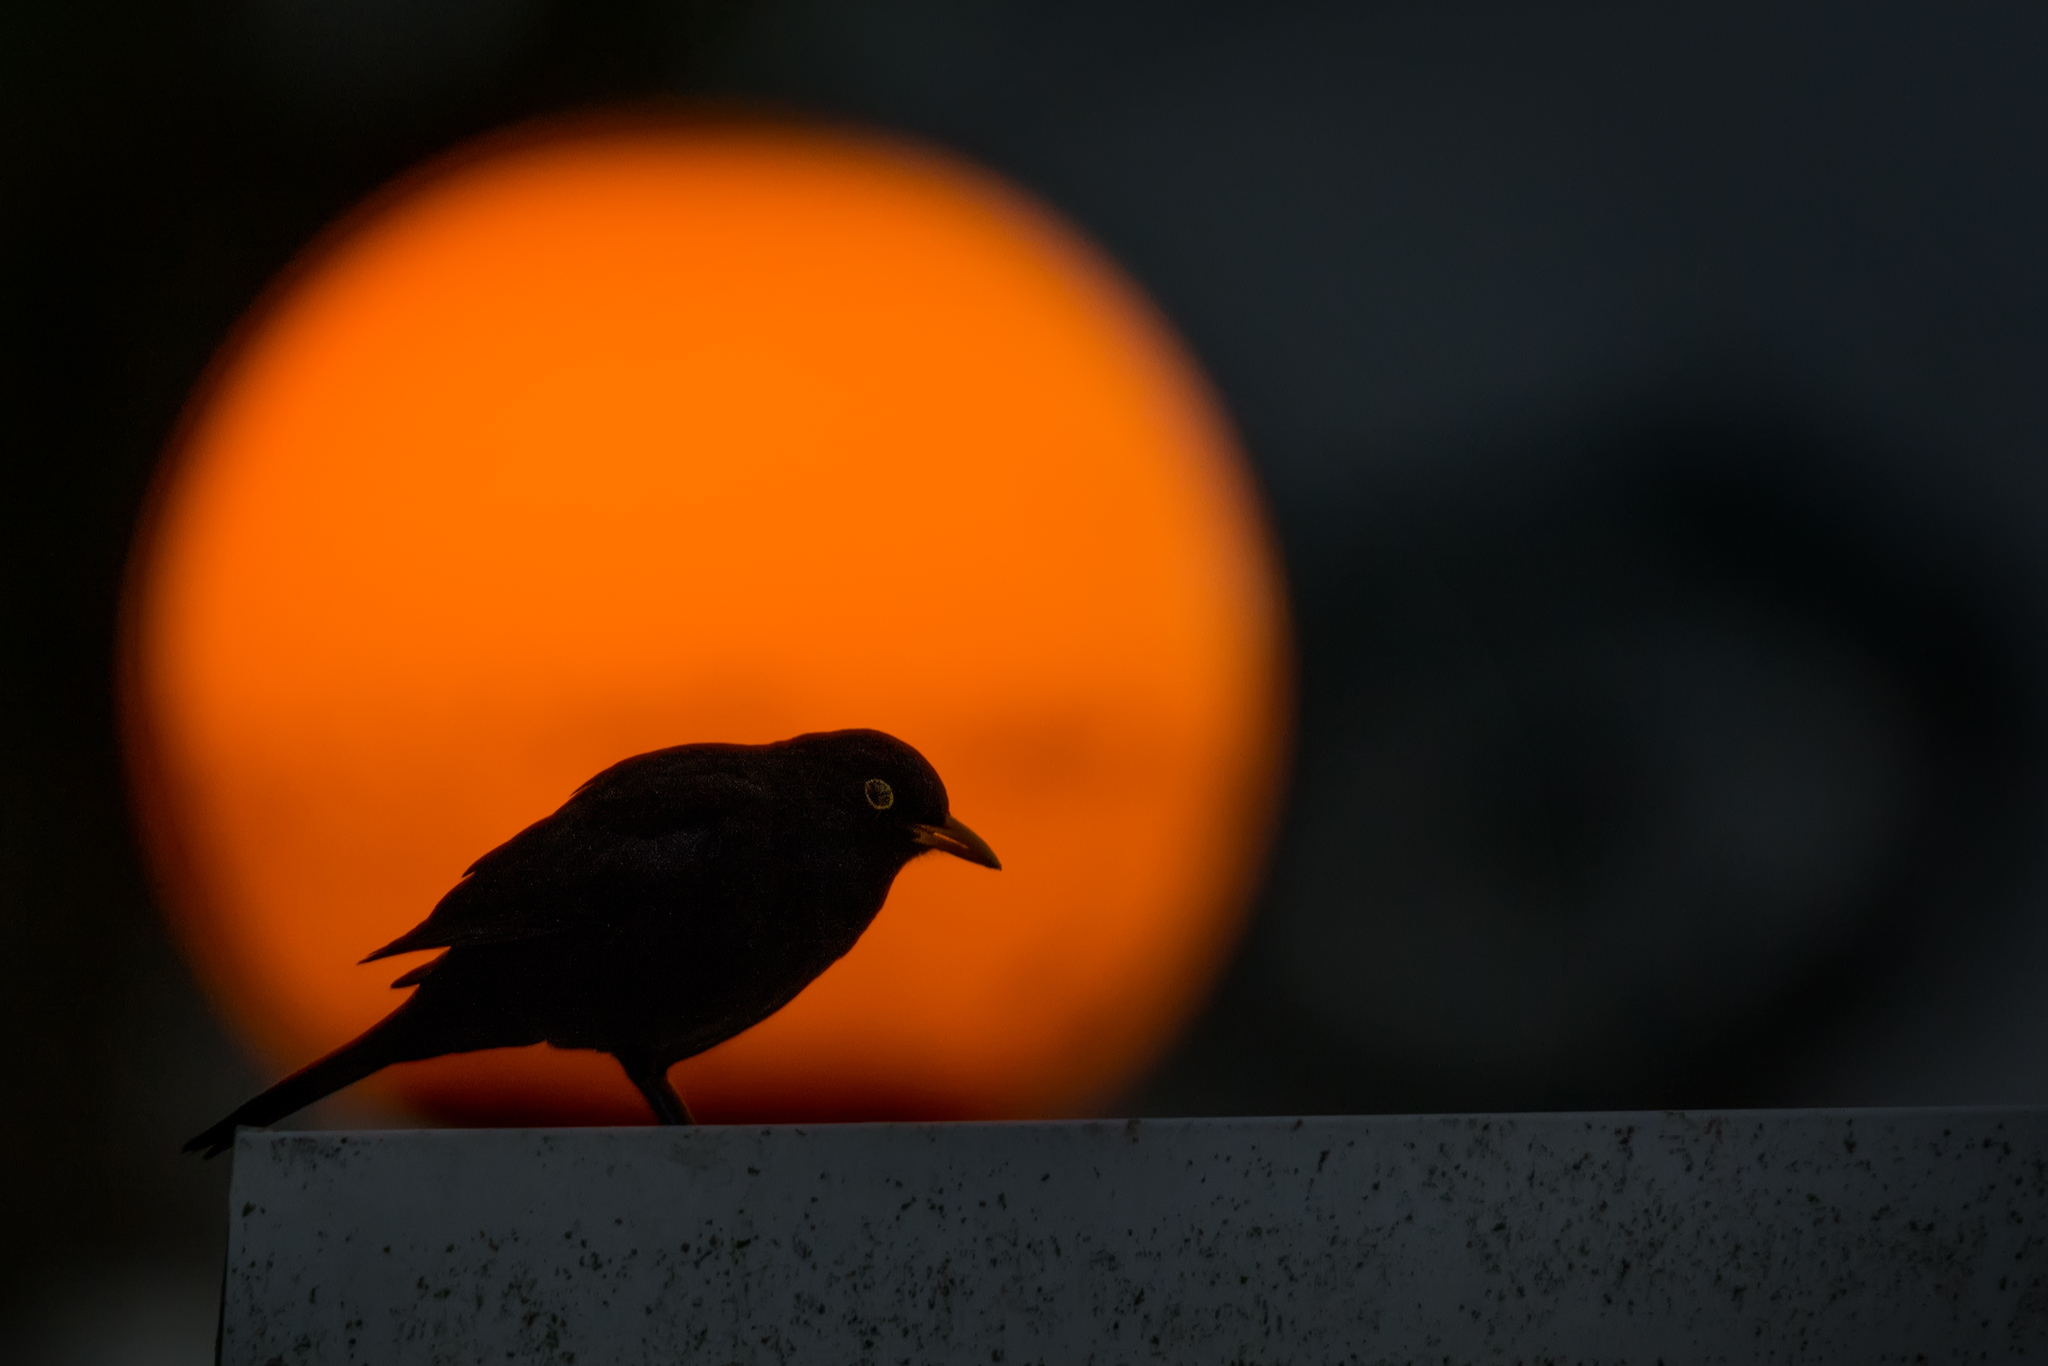 Blackbird @ sunset